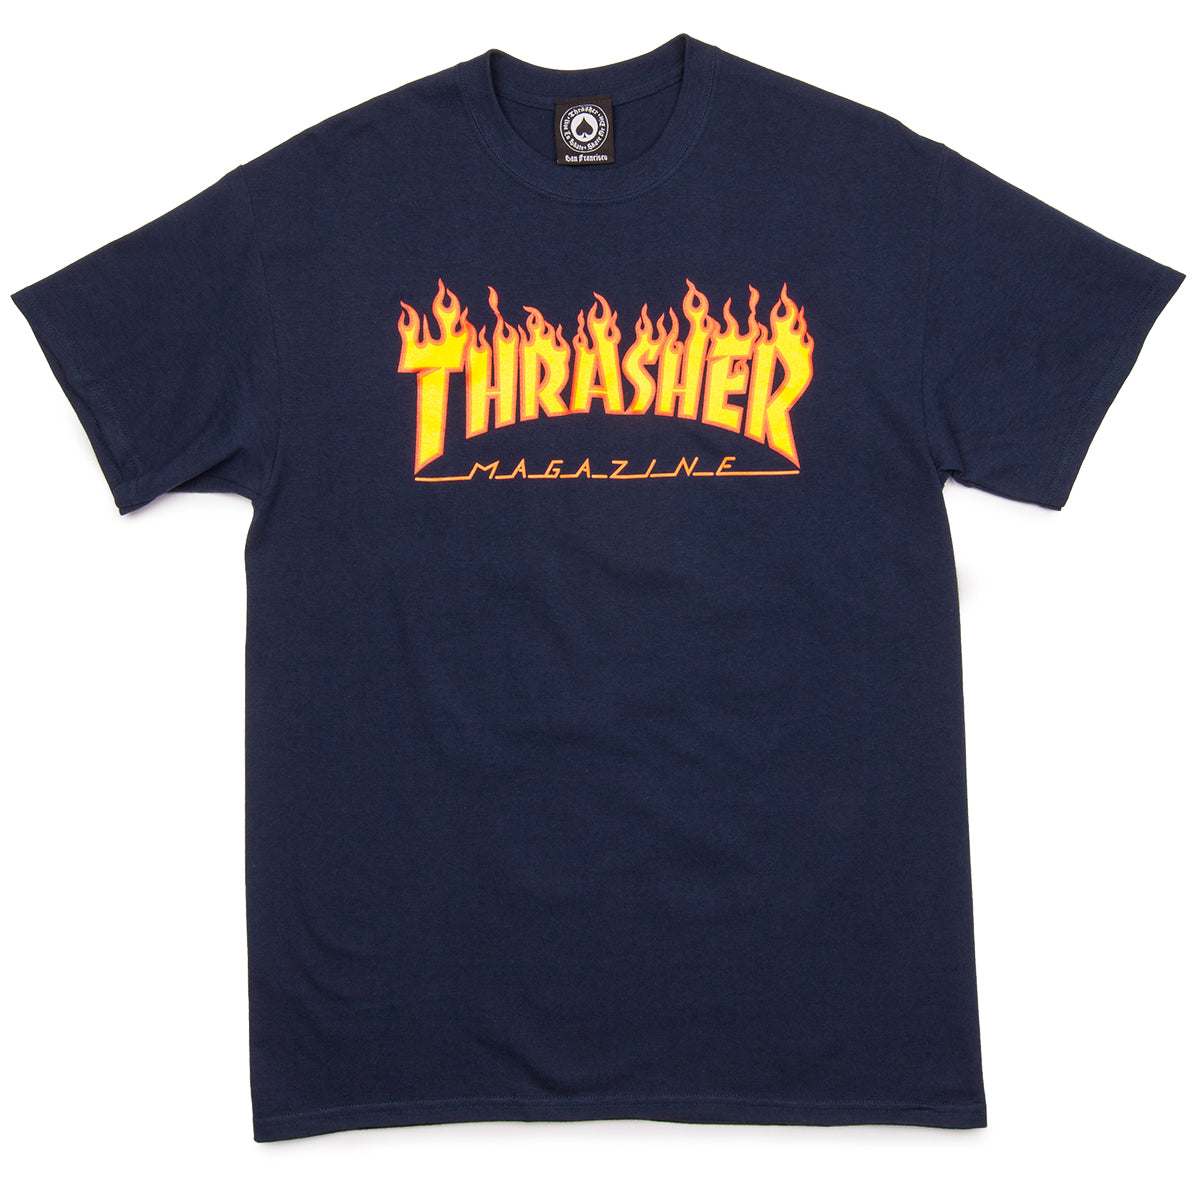 Thrasher Flame T-Shirt - Navy image 1